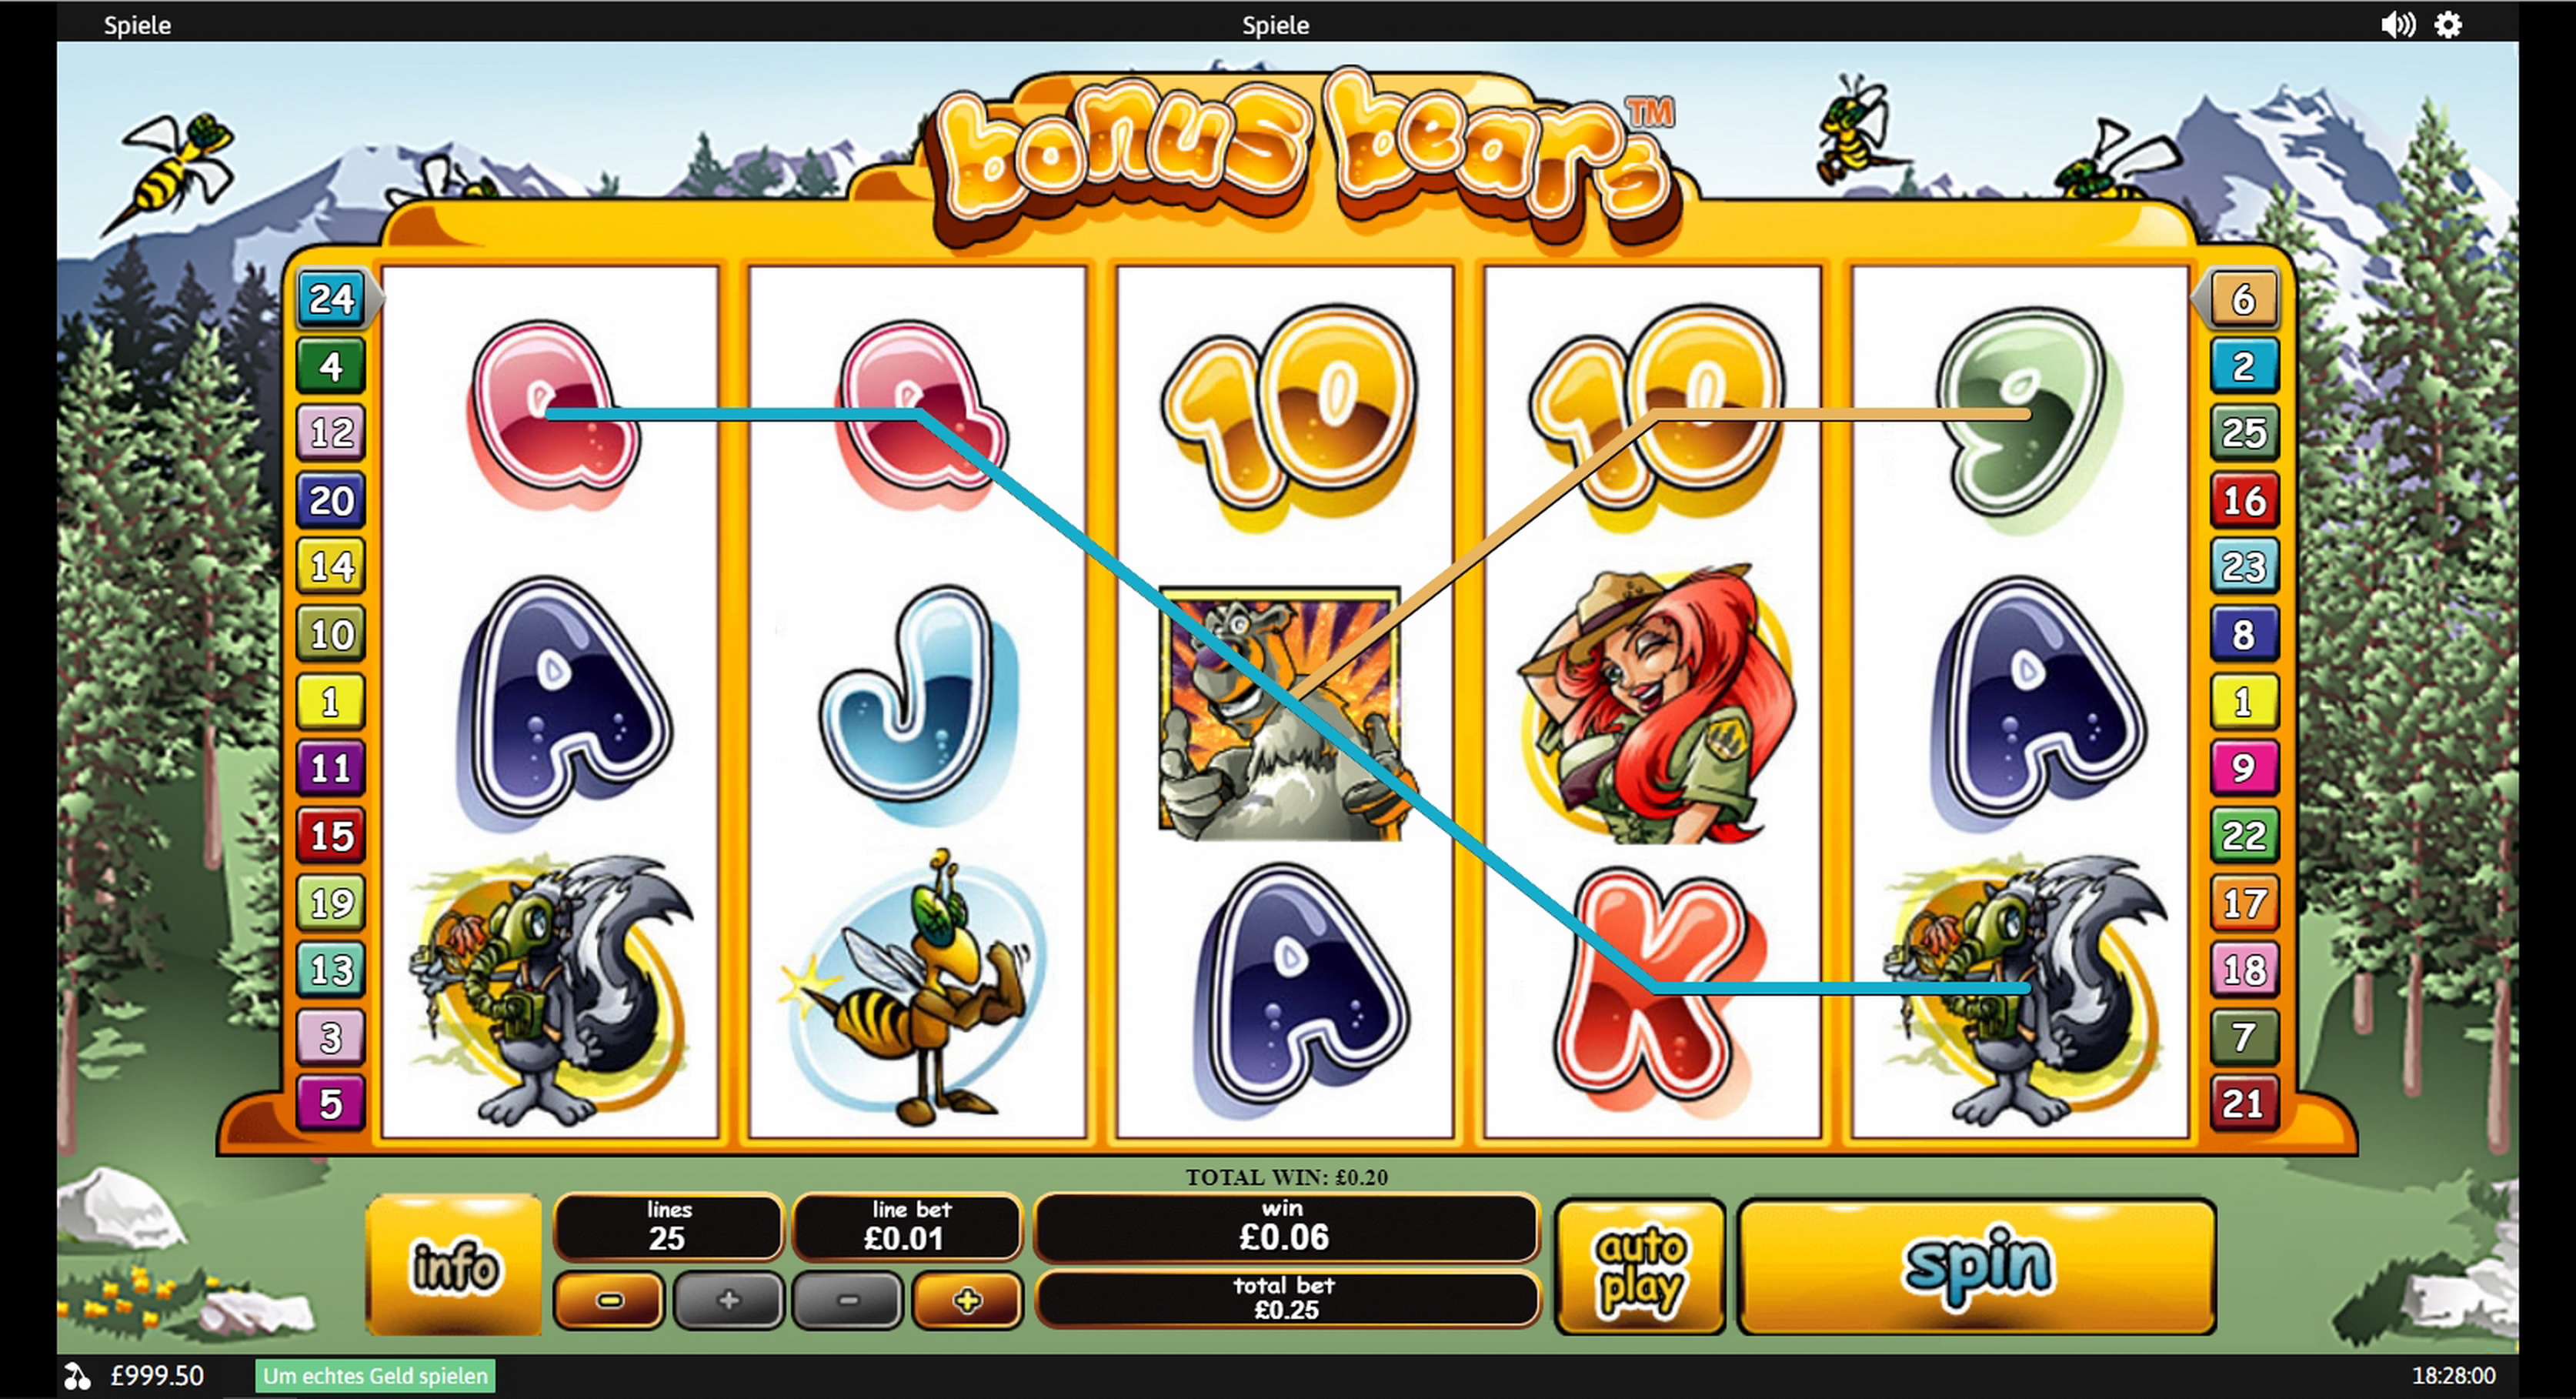 Win Money in Bonus Bears Free Slot Game by Playtech